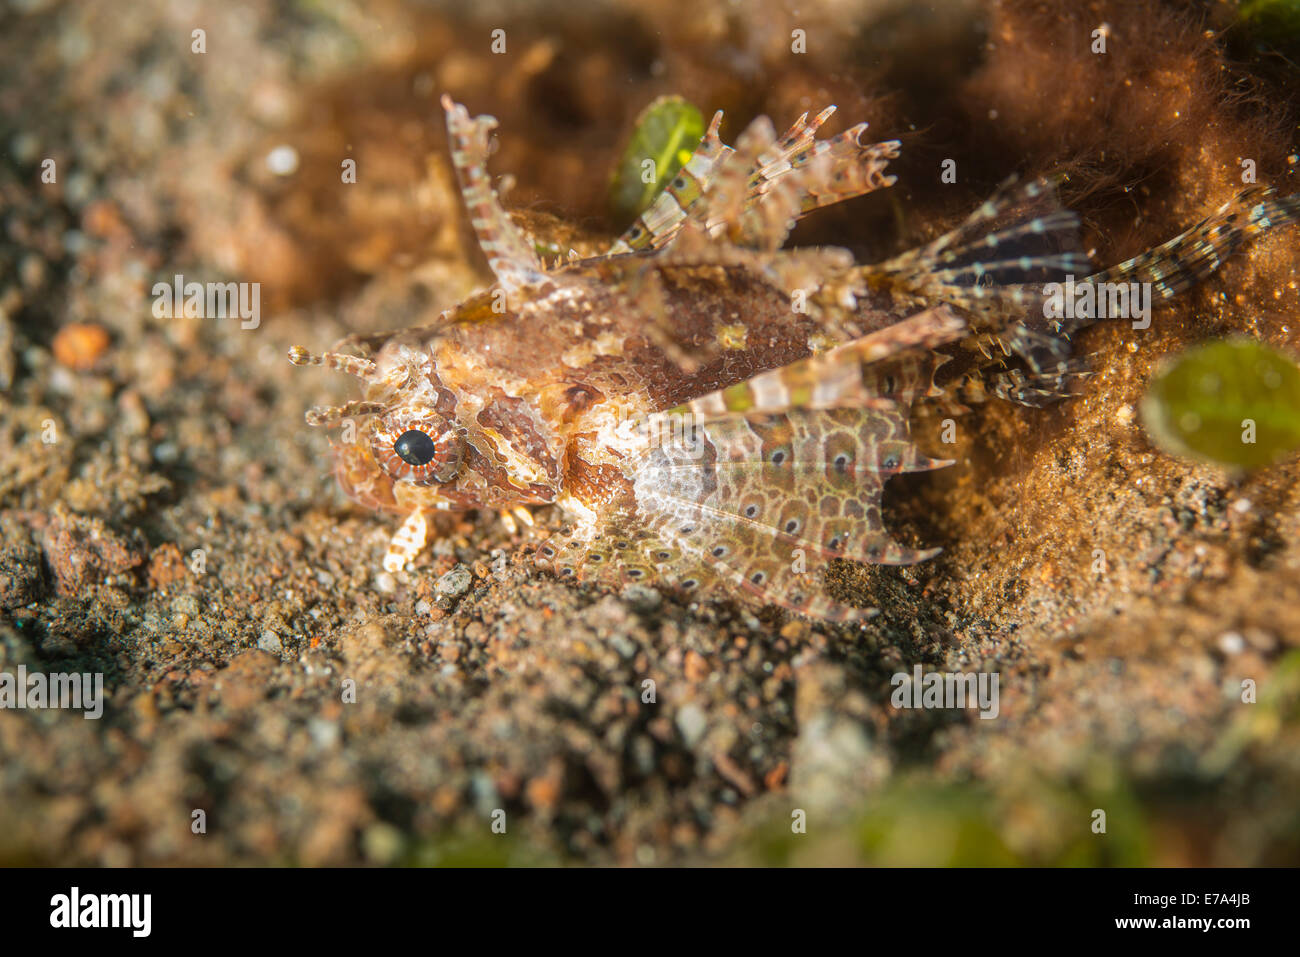 Shortfin lionfish or fuzzy dwarf lionfish (dendrochirus brachypterus) Stock Photo